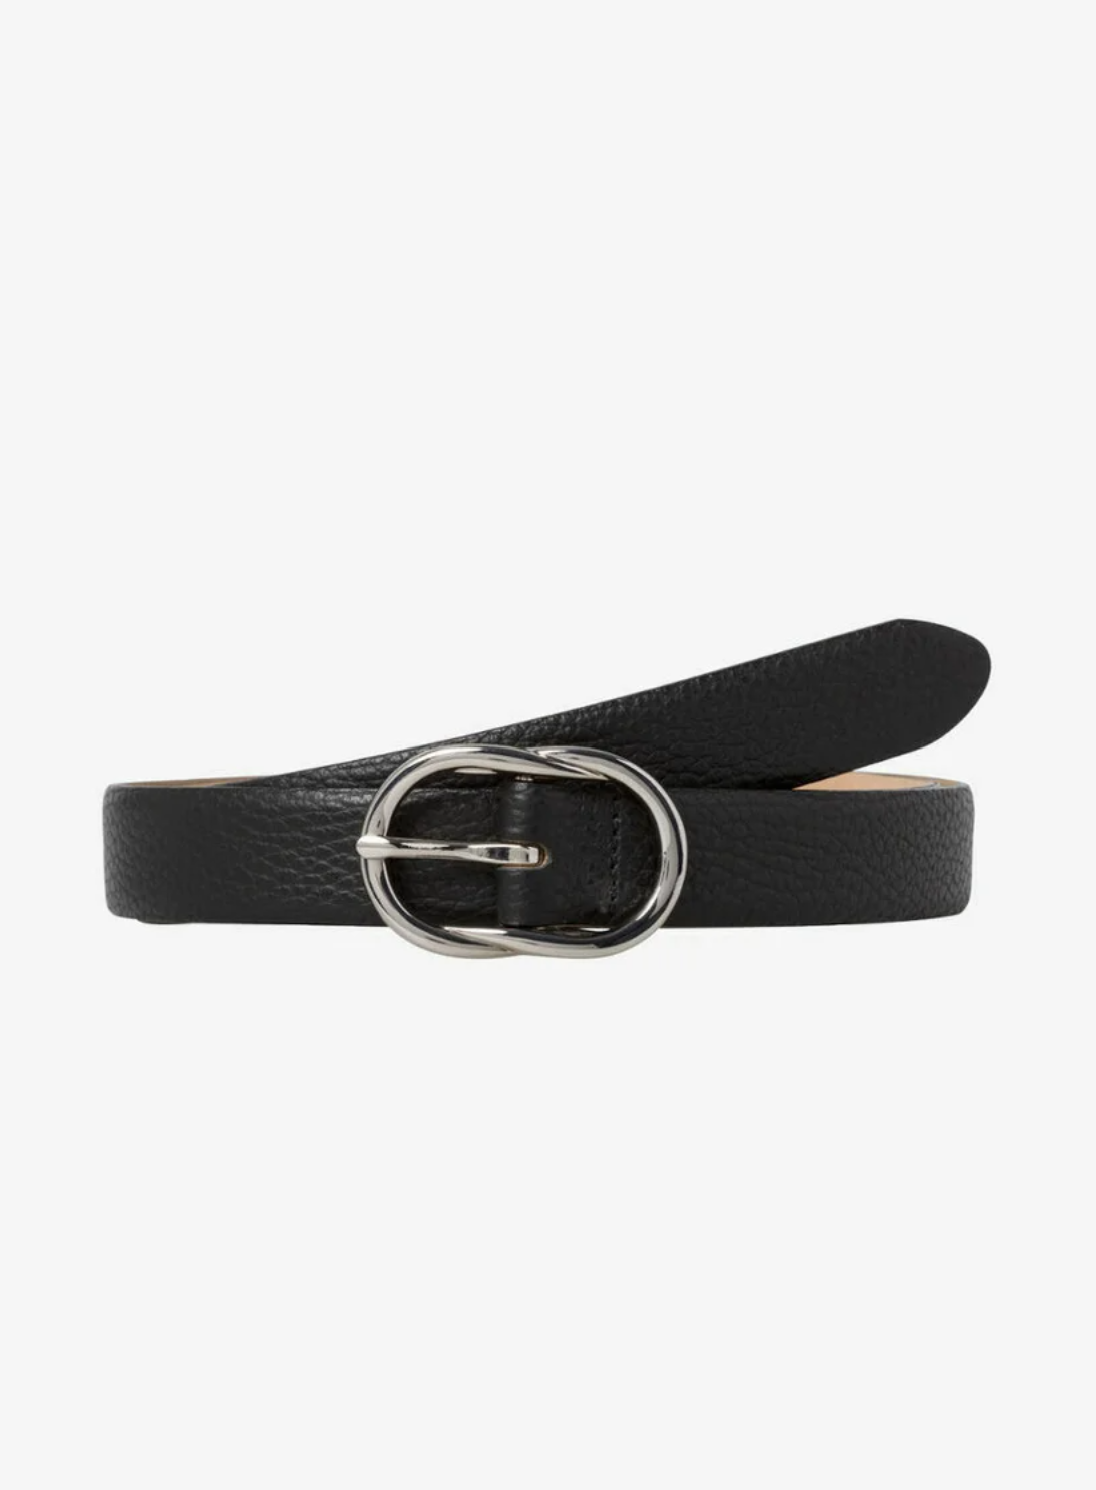 DOB – Style Gürtel Belt Campbell Brax Oliver